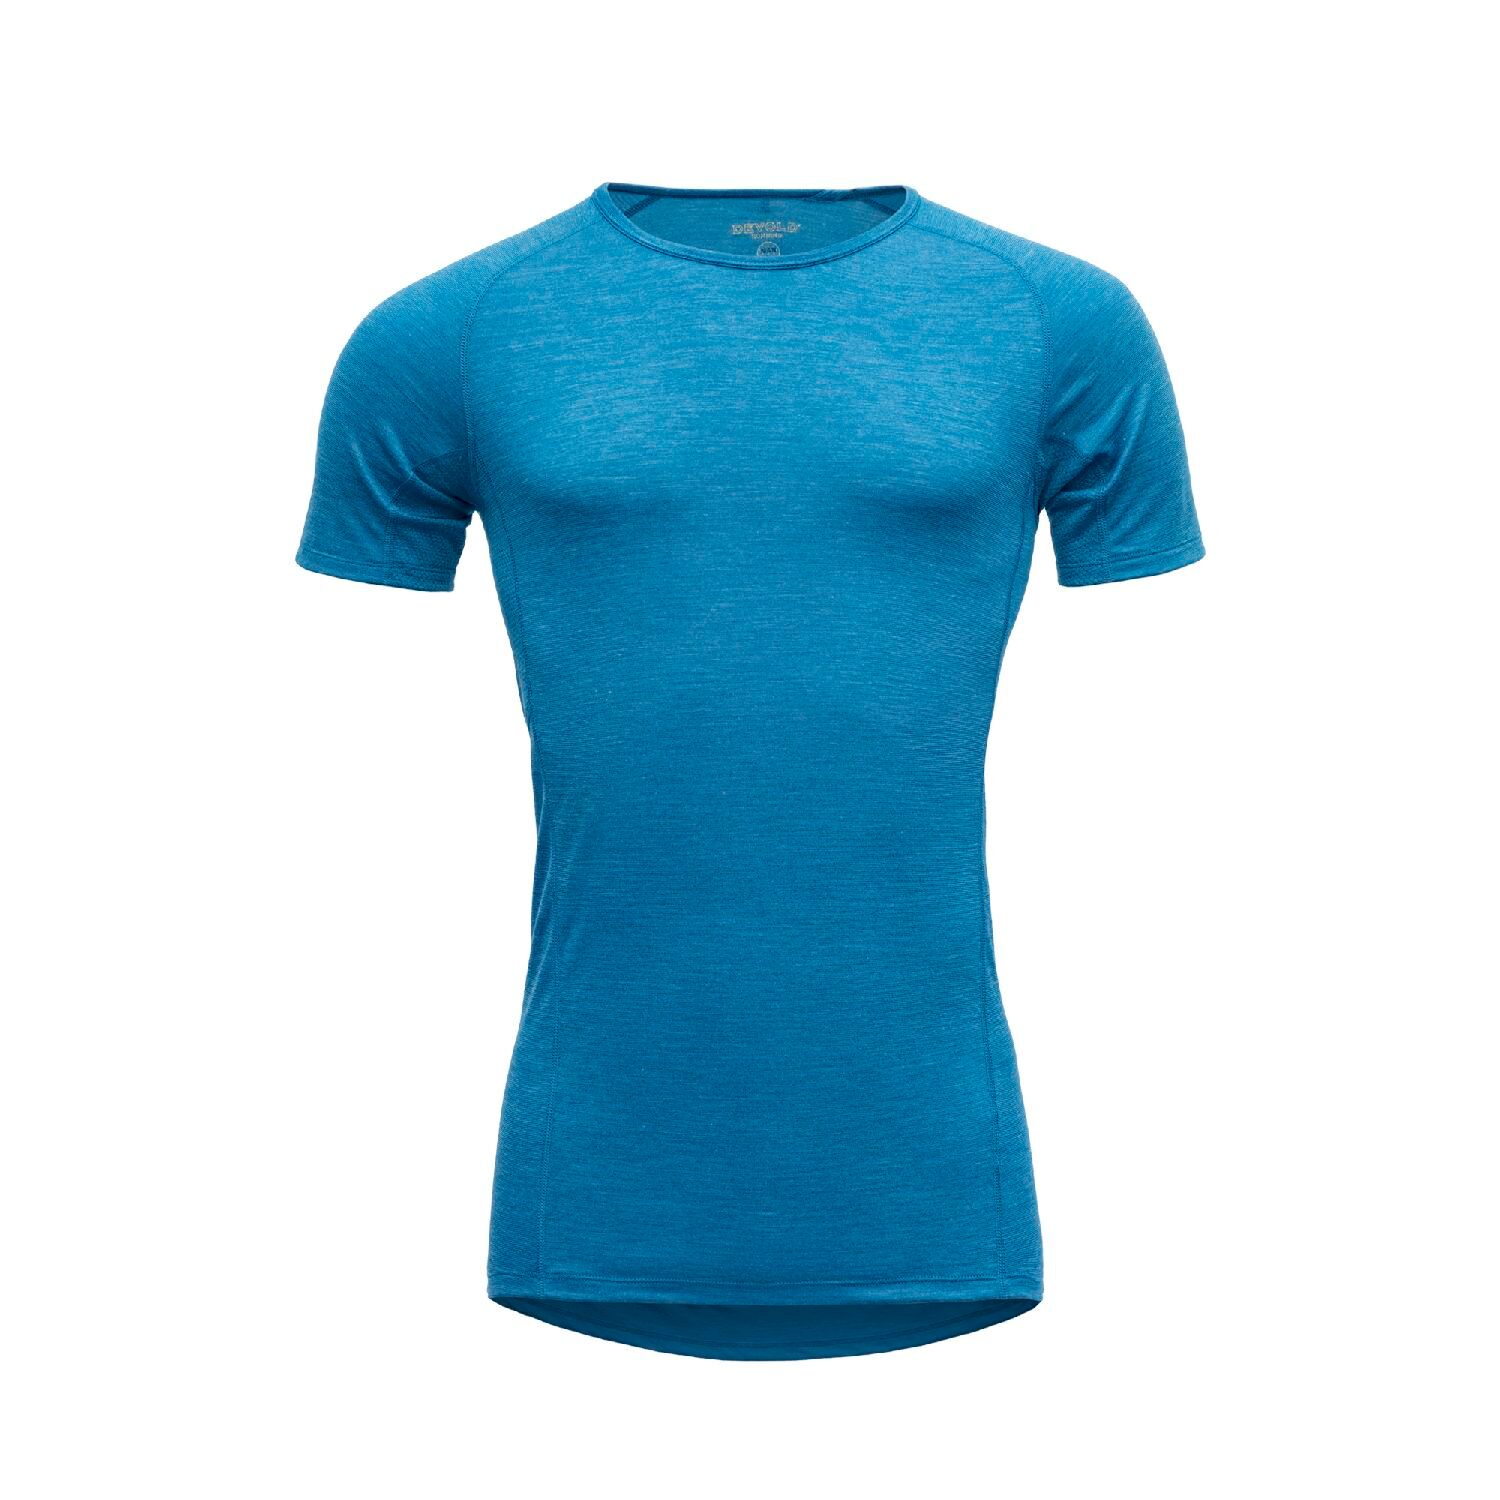 Devold Running - T-shirt - Men's